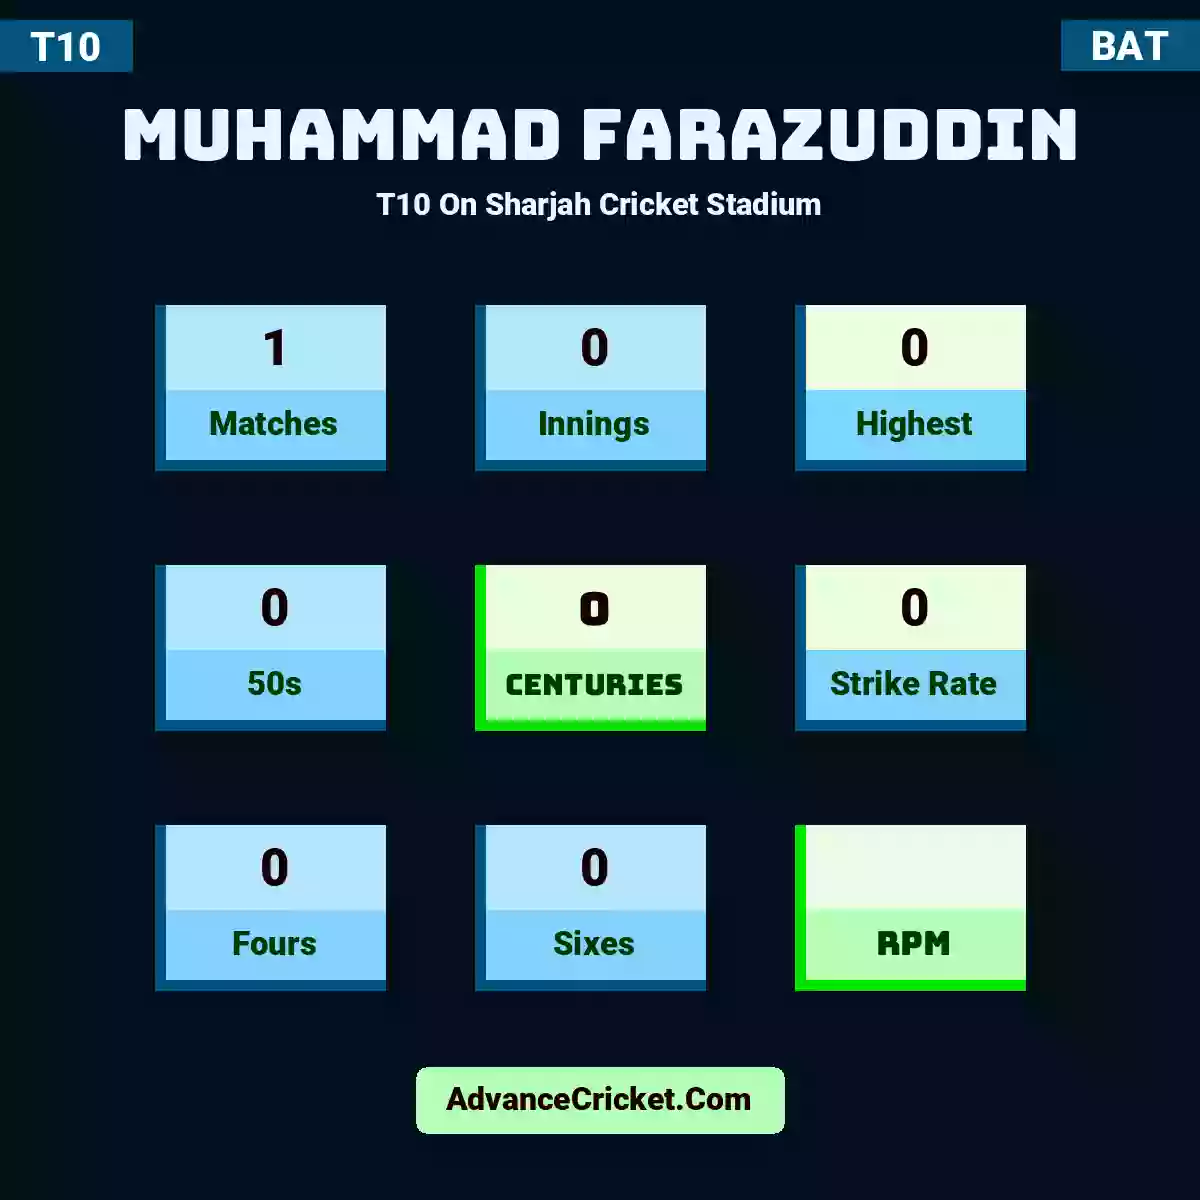 Muhammad Farazuddin T10  On Sharjah Cricket Stadium, Muhammad Farazuddin played 1 matches, scored 0 runs as highest, 0 half-centuries, and 0 centuries, with a strike rate of 0. M.Farazuddin hit 0 fours and 0 sixes.